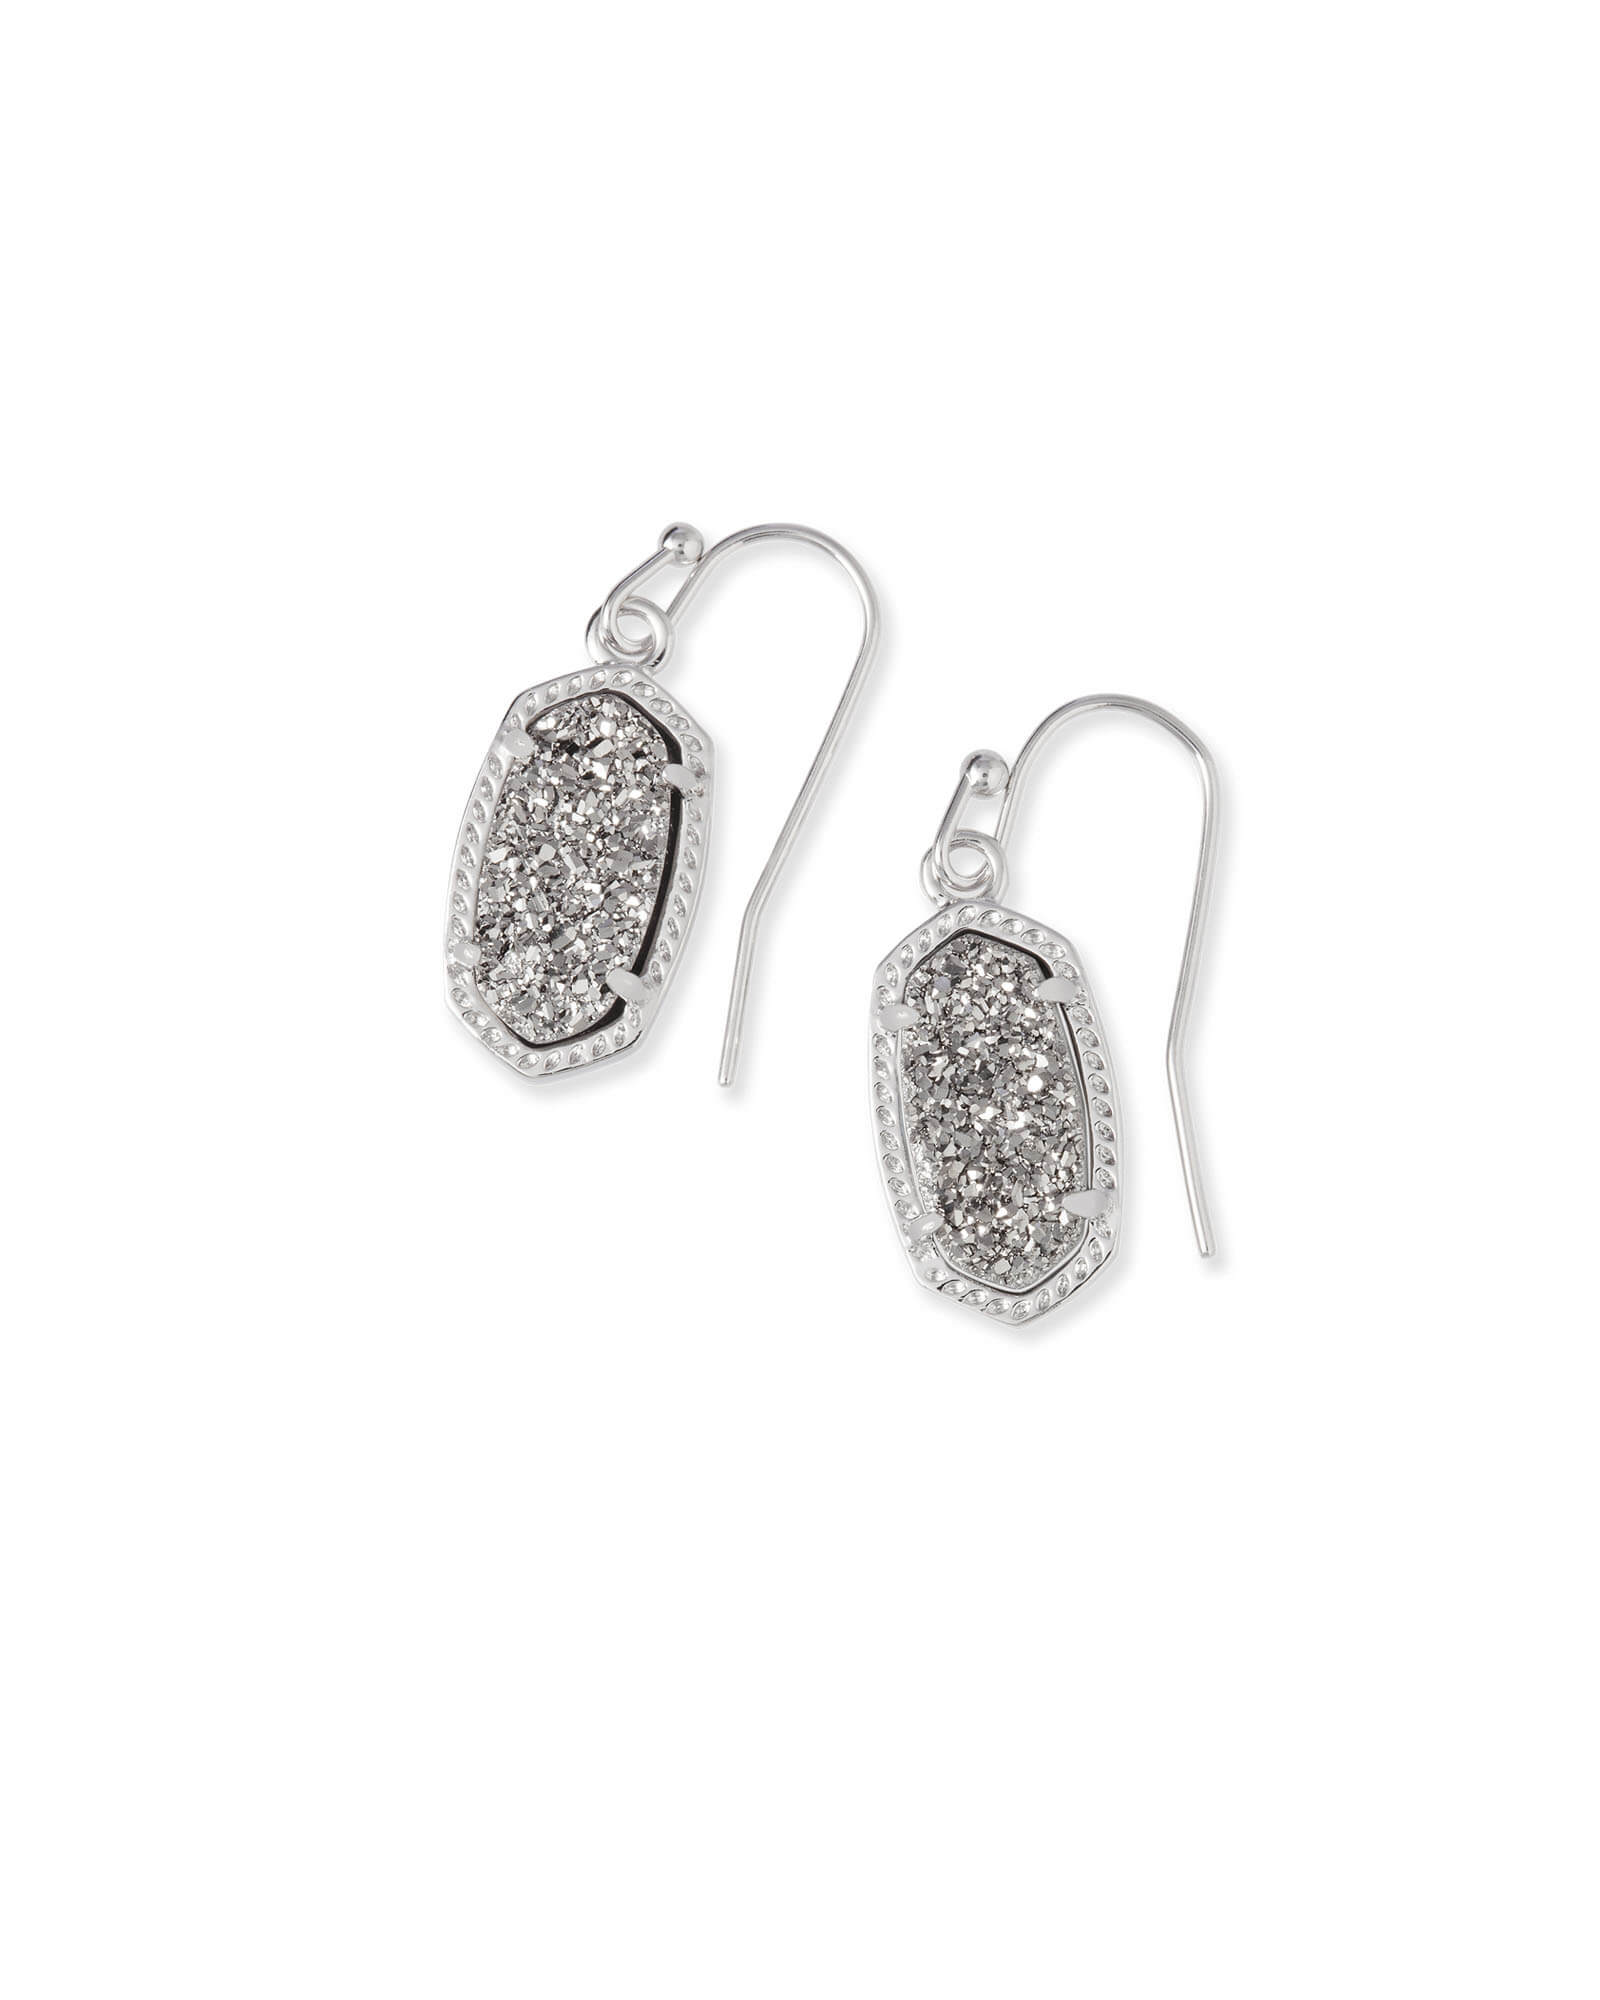 Kendra Scott Cade Silver Stud Earrings in Platinum Drusy 